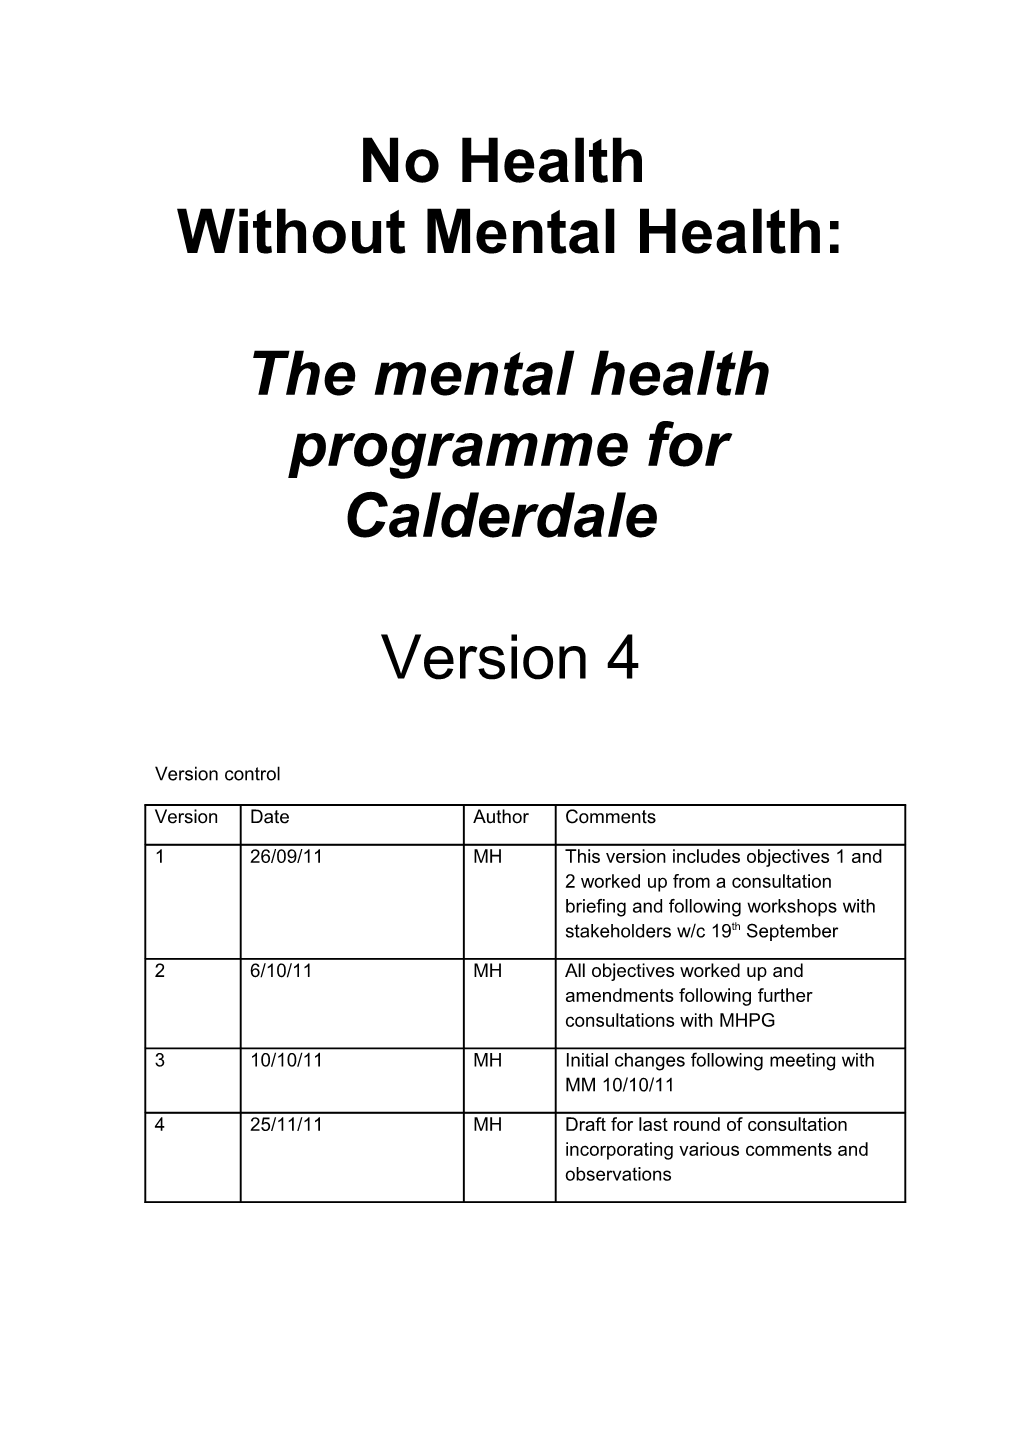 The Mental Health Programme for Calderdale